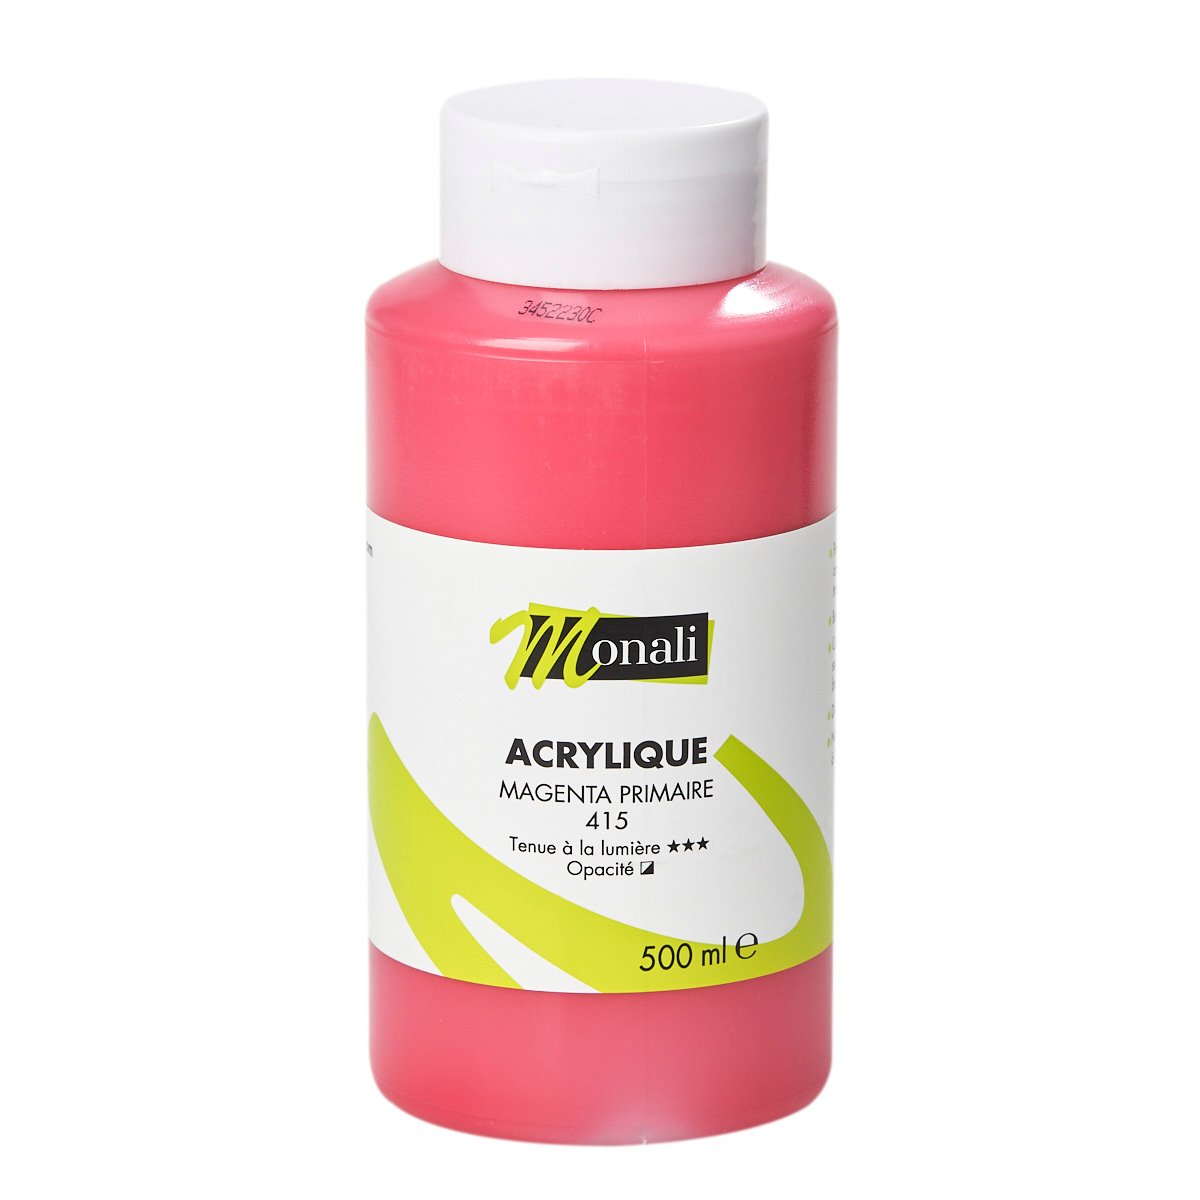 Acrylic 500ml - Magenta primaire - Monali